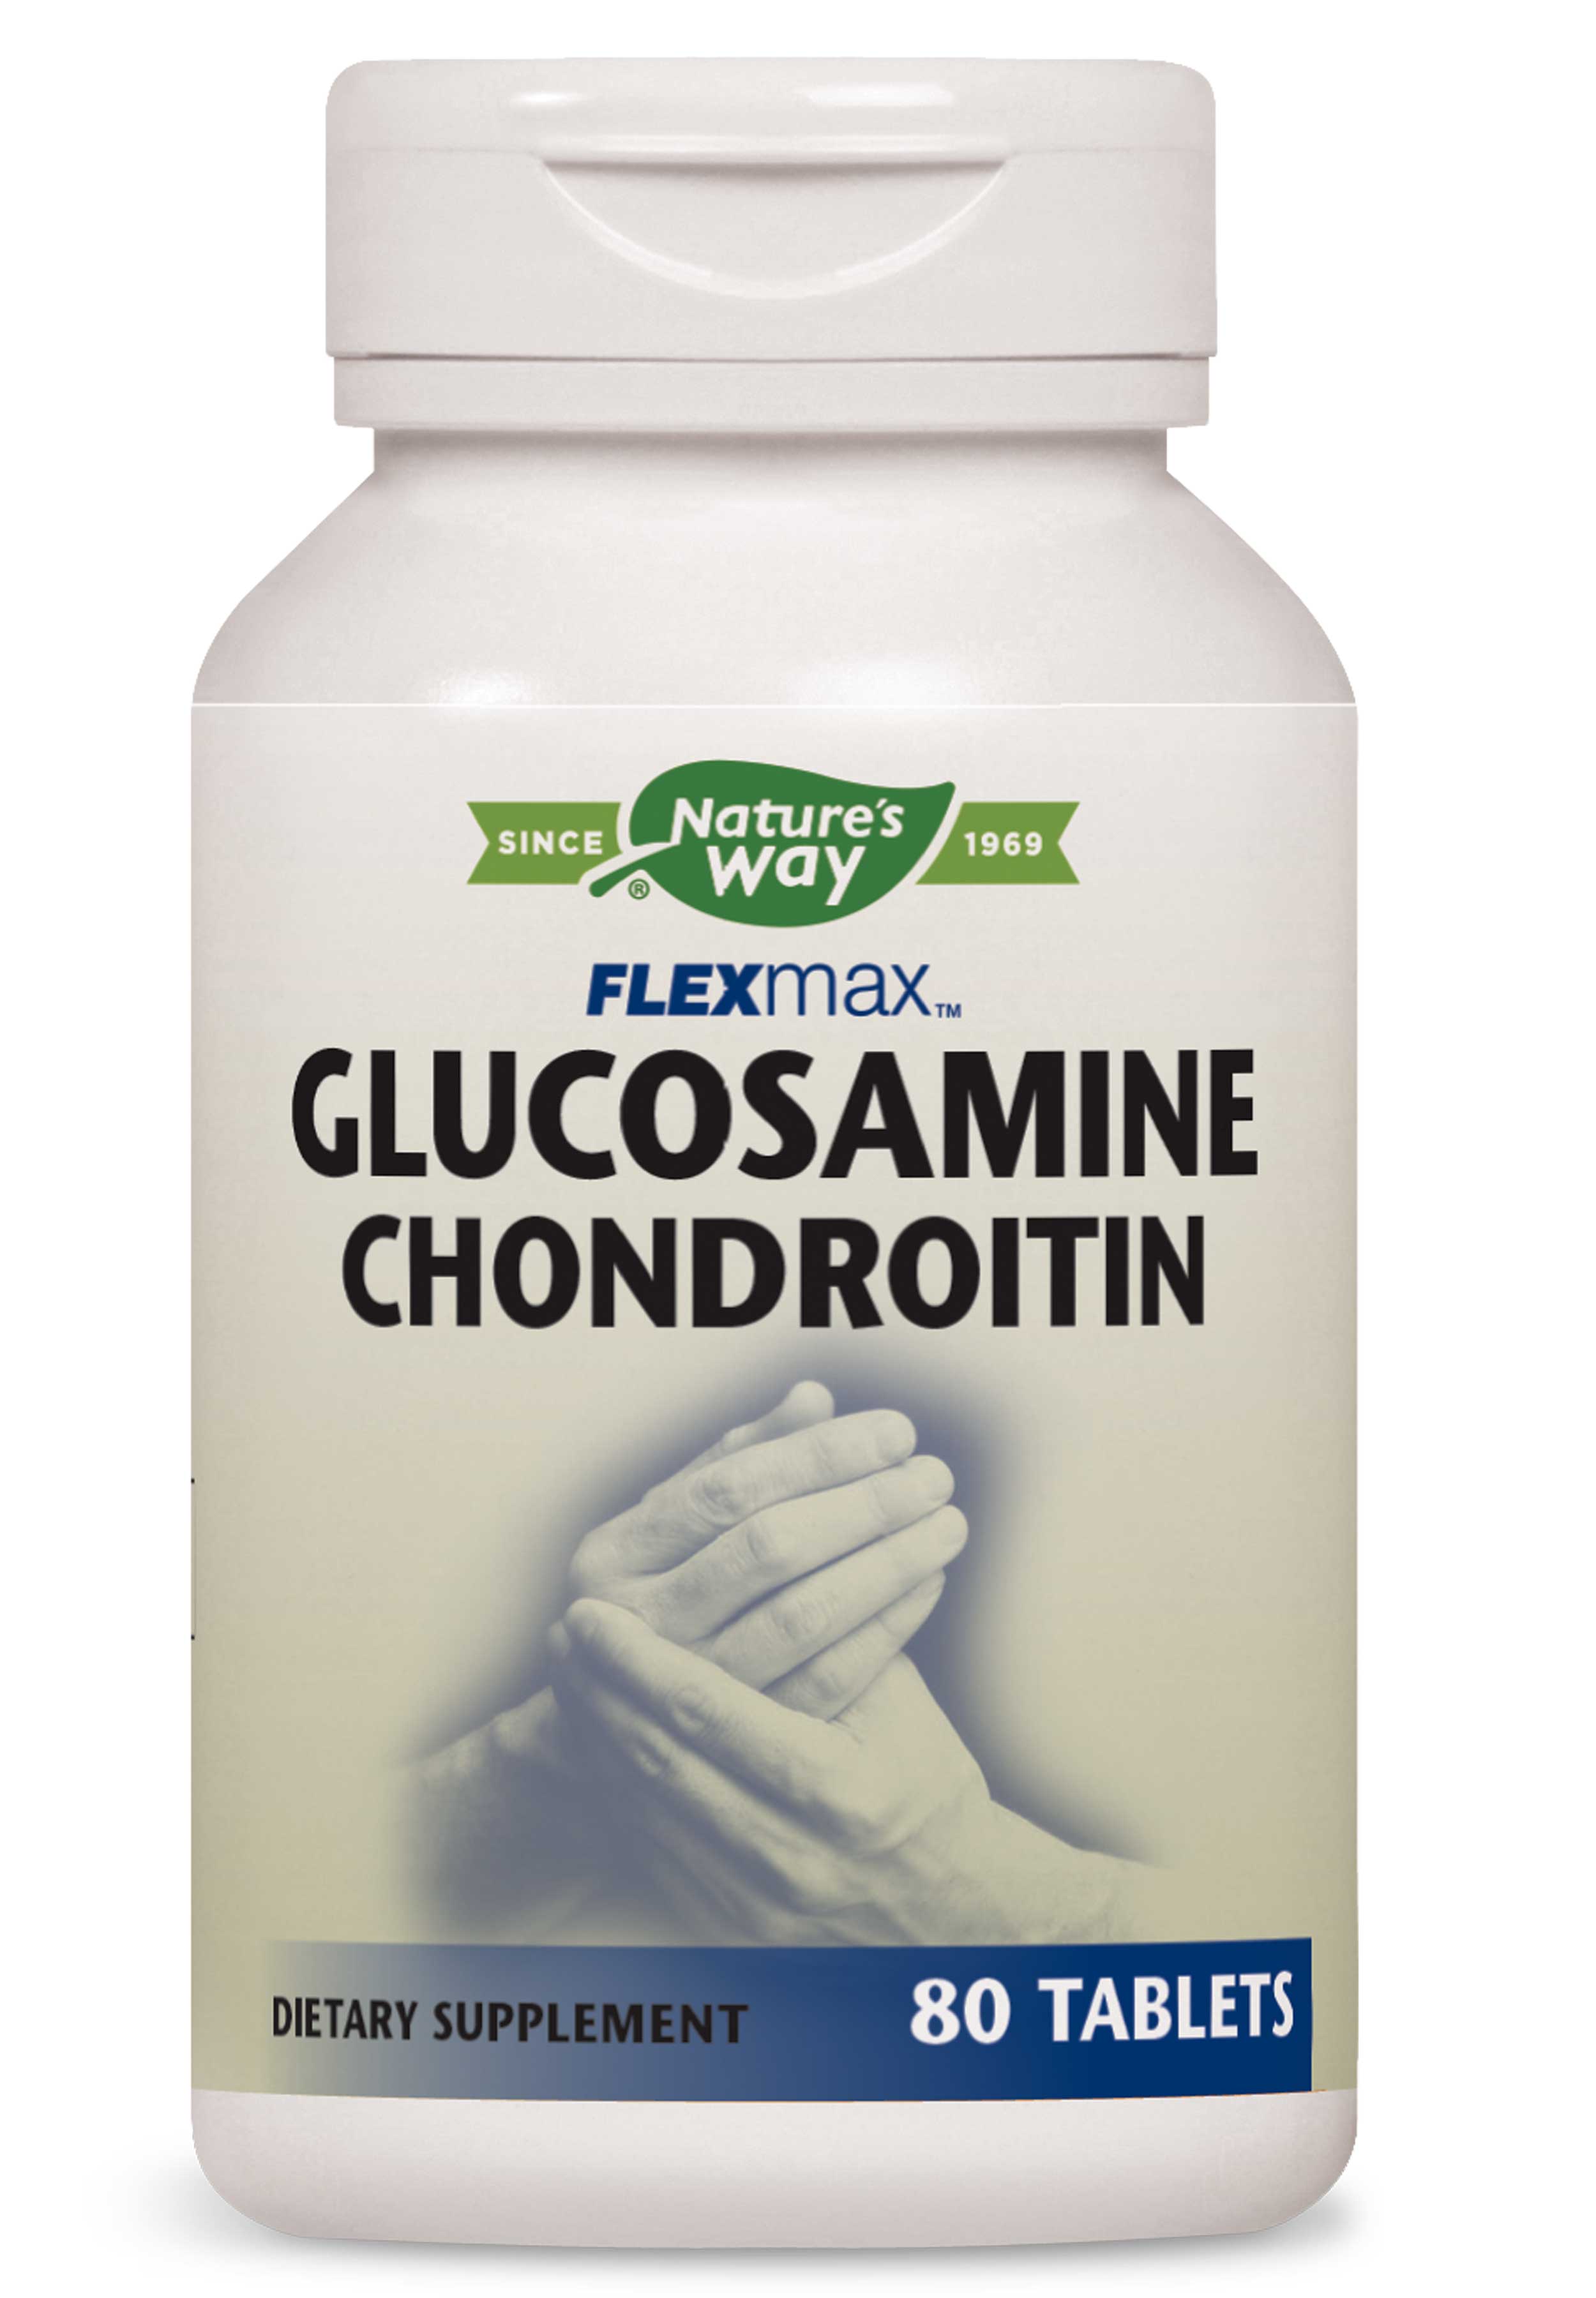 Nature's Way FlexMax Glucosamine Chondroitin